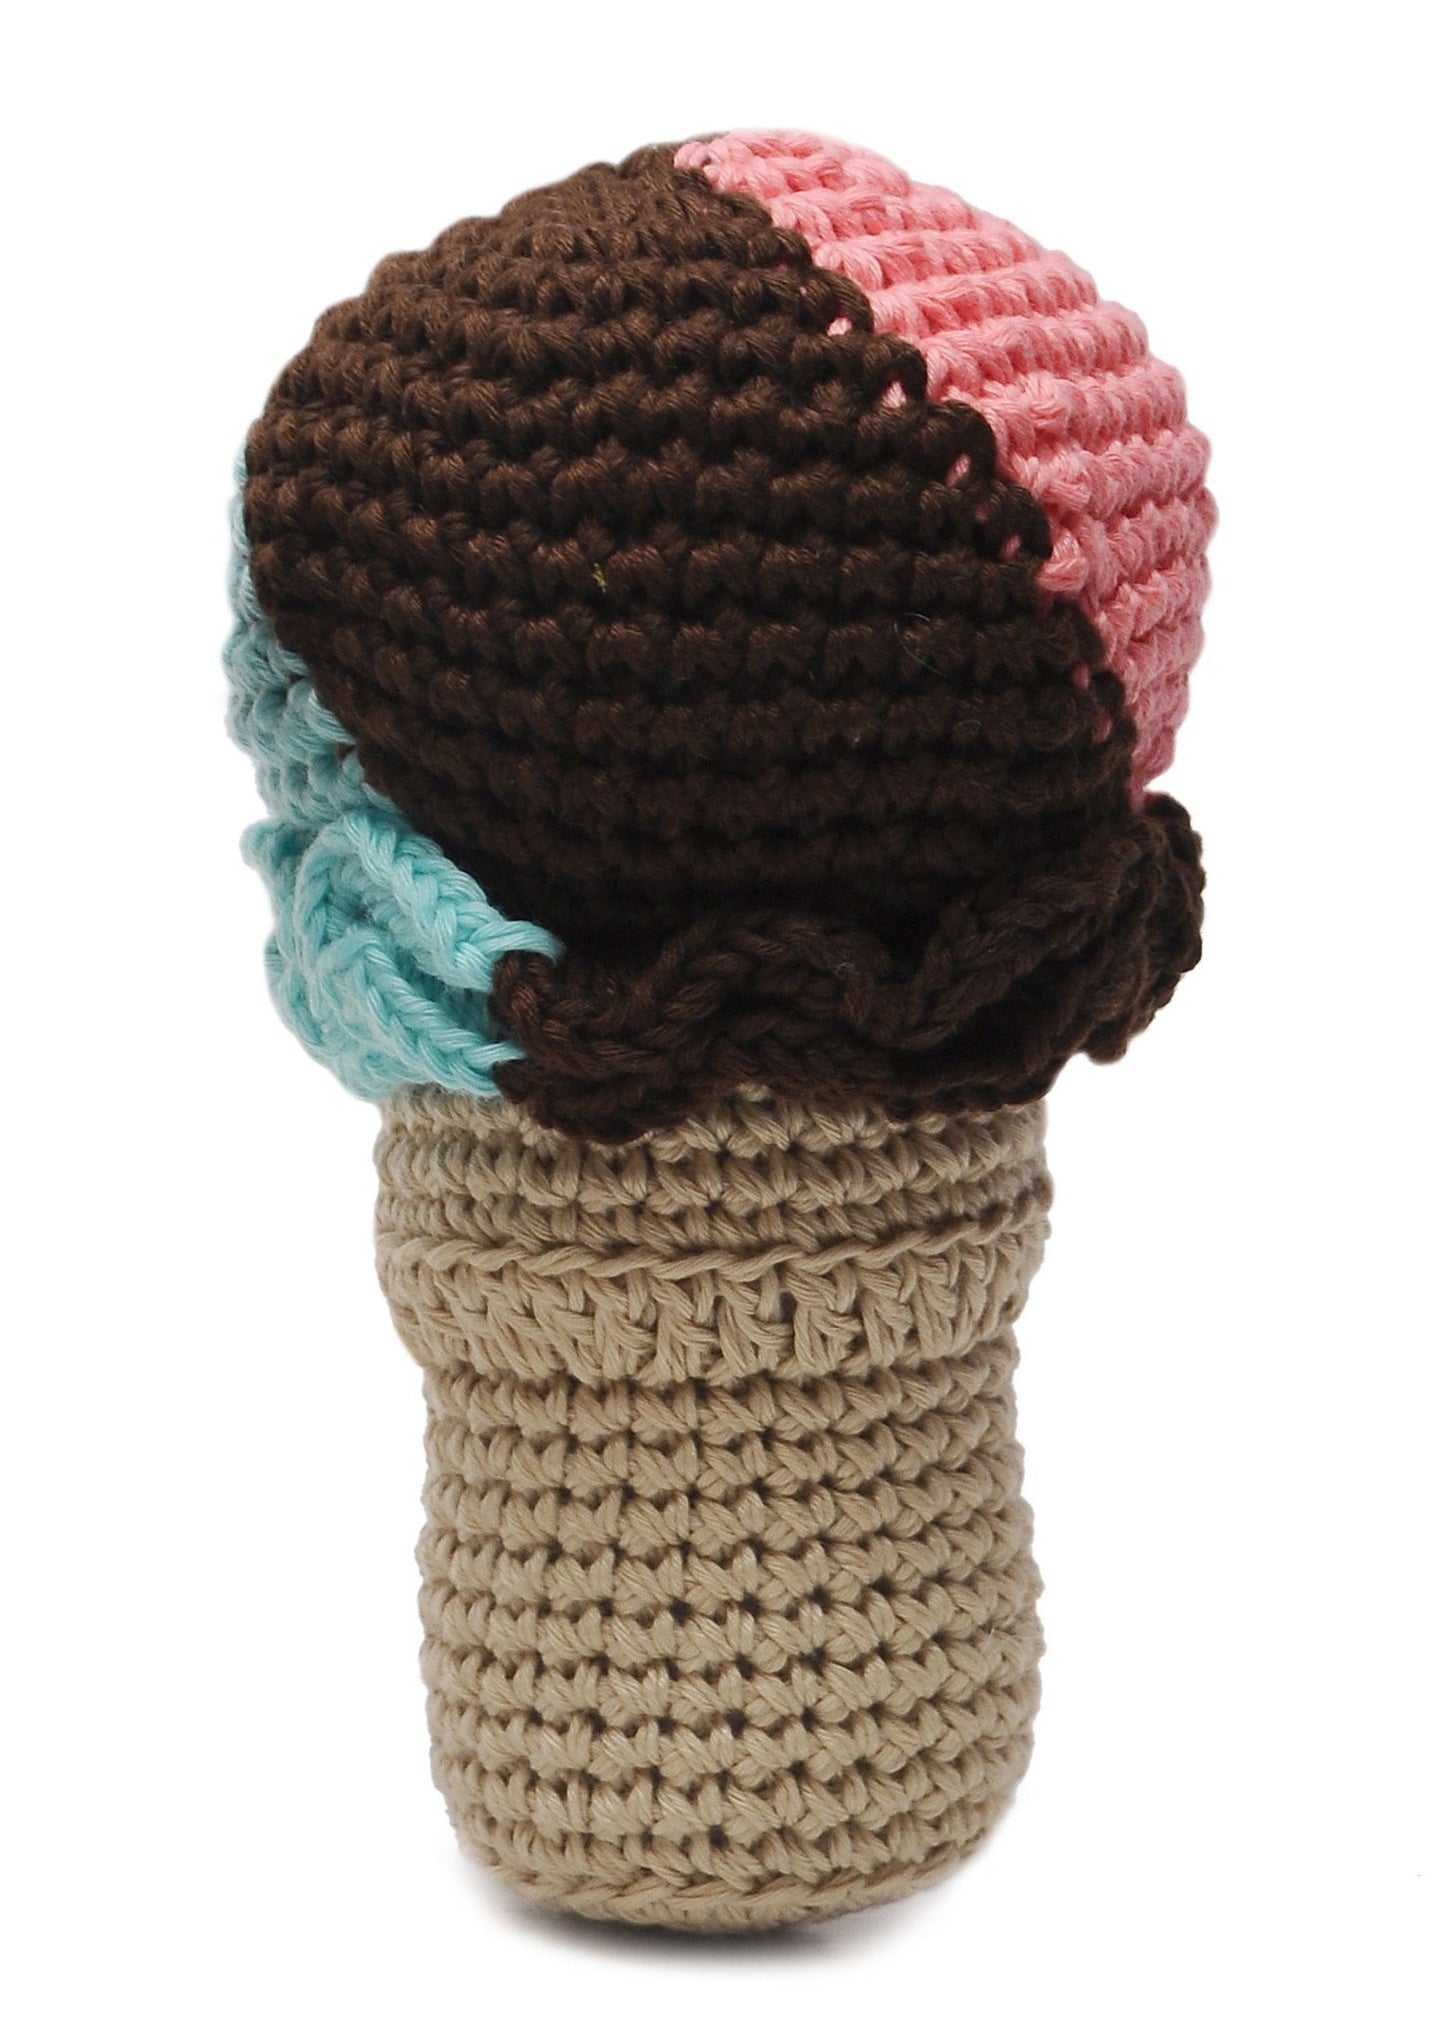 2-Flavor Scoop Ice Cream Handmade Amigurumi Stuffed Toy Knit Crochet Doll VAC